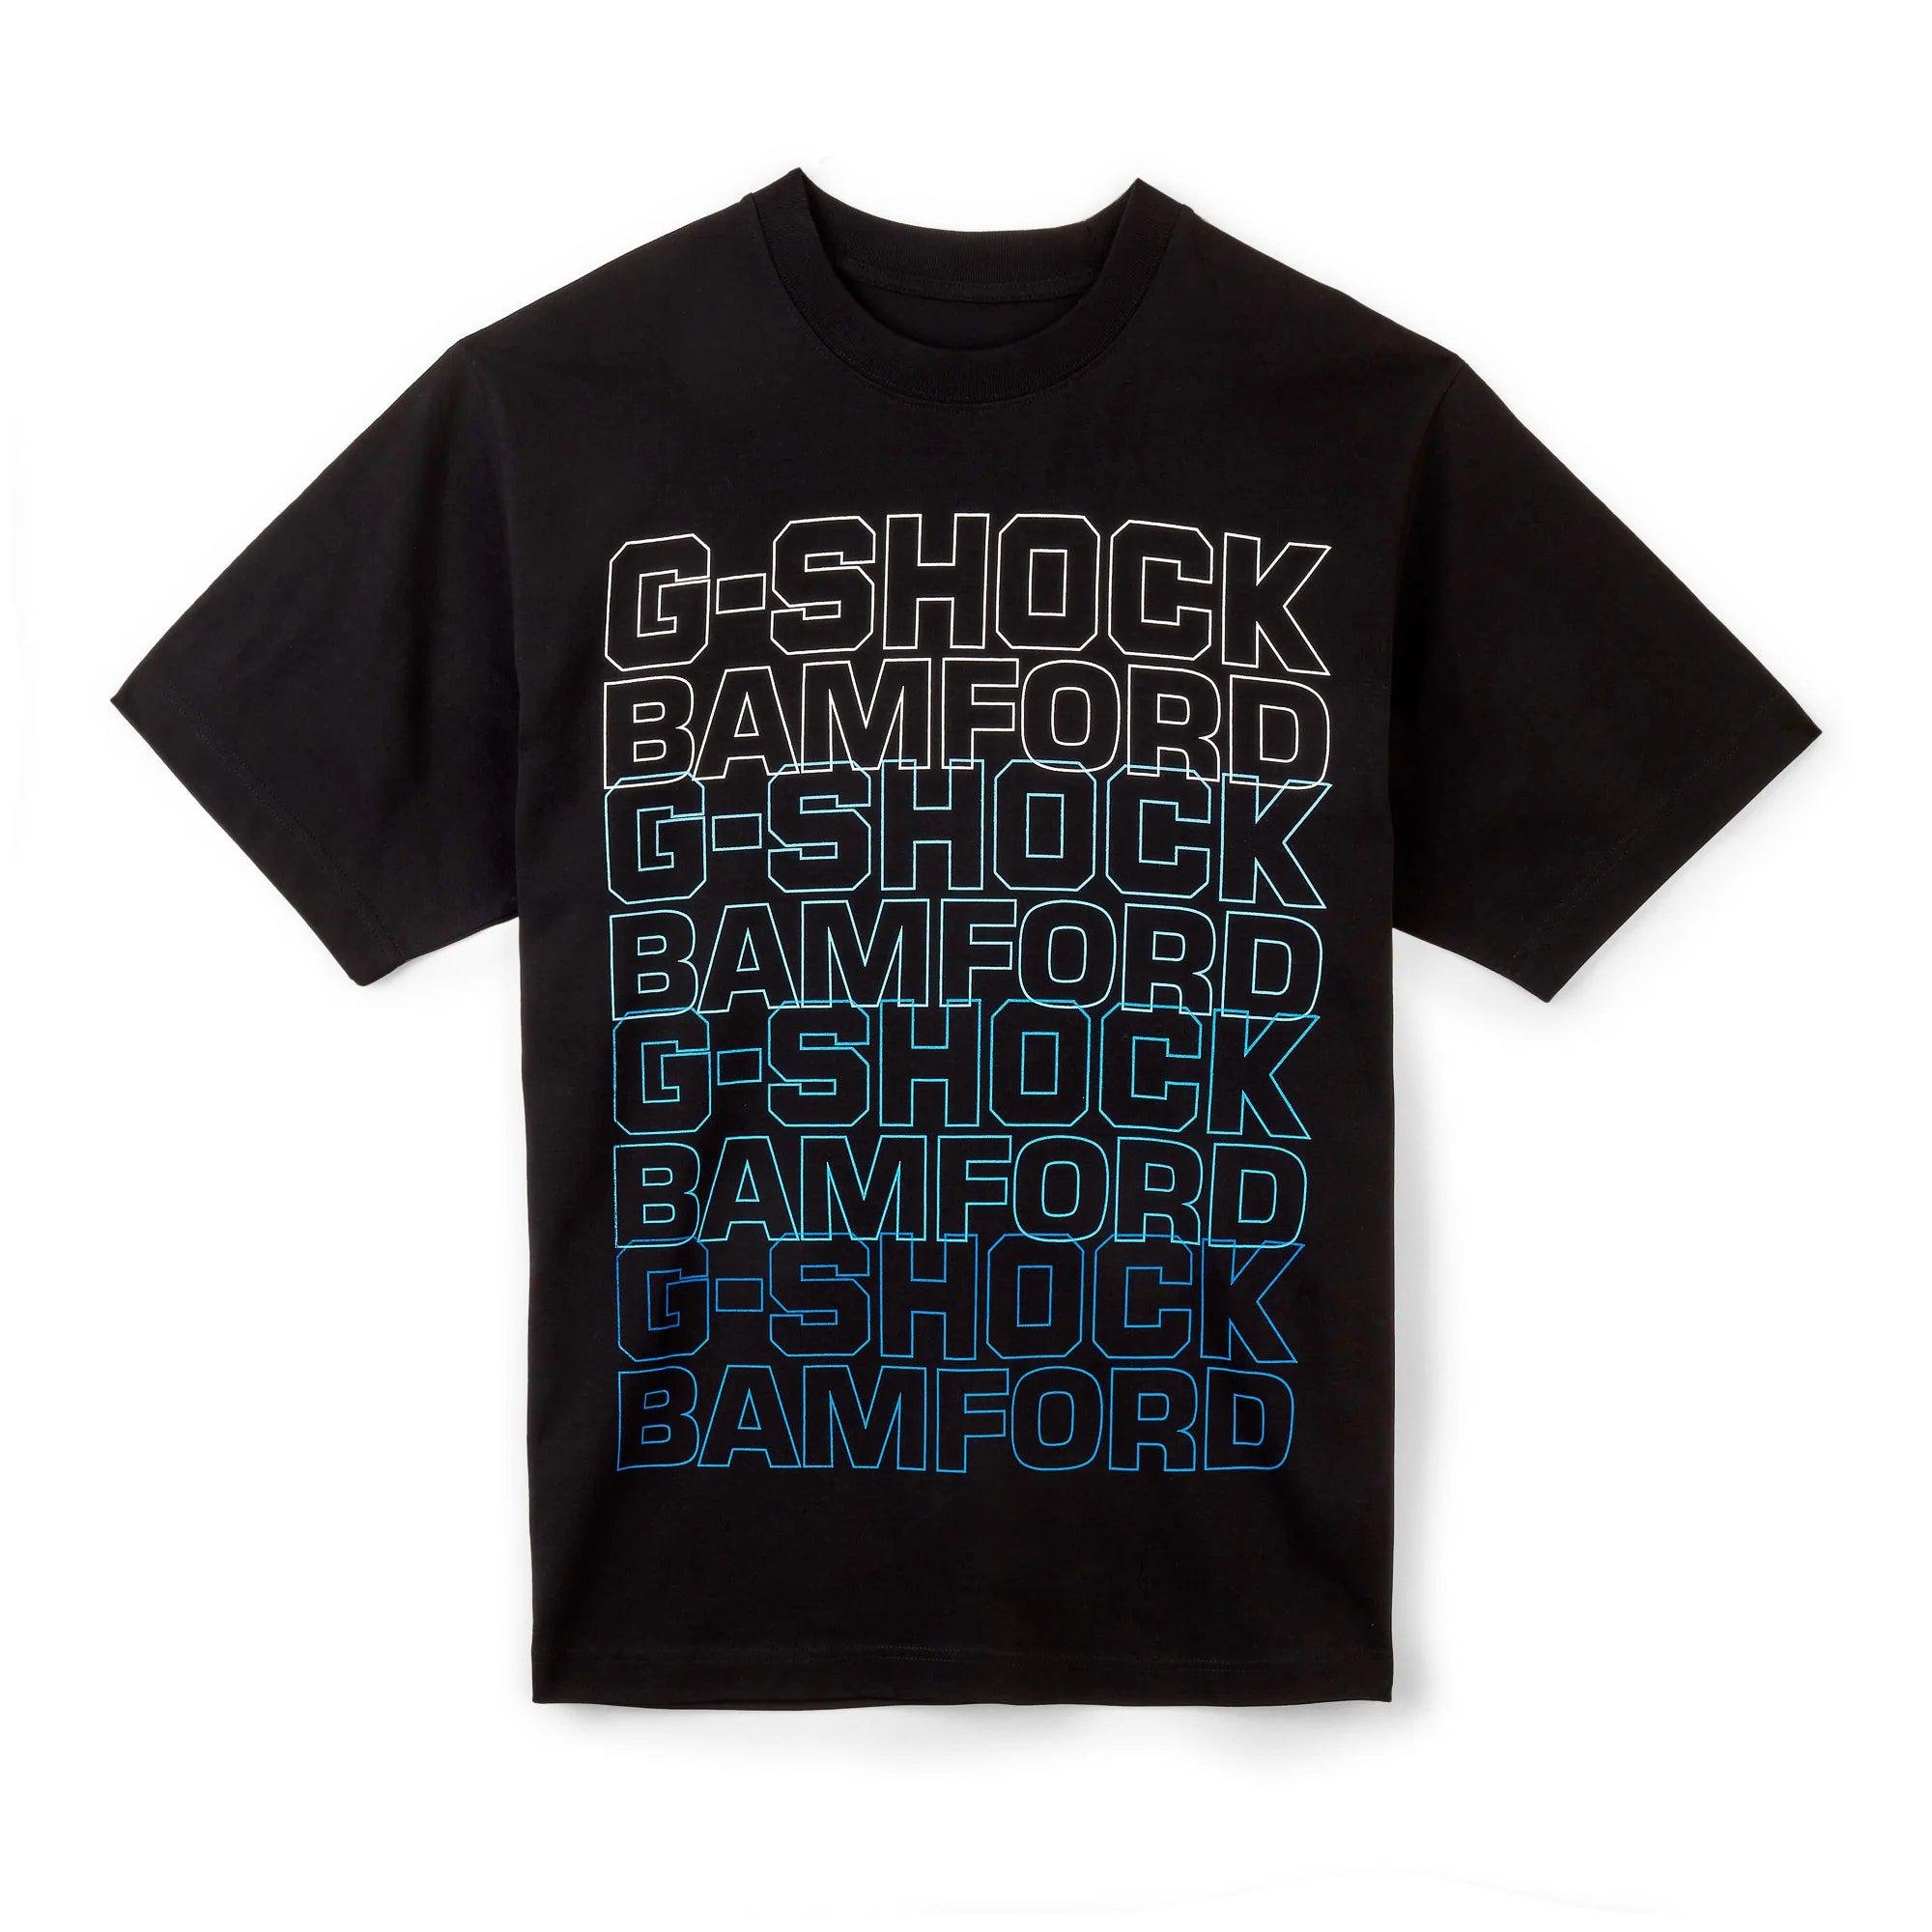 BAMFORD - Casio G-Shock T-Shirt - (Black) by BAMFORD